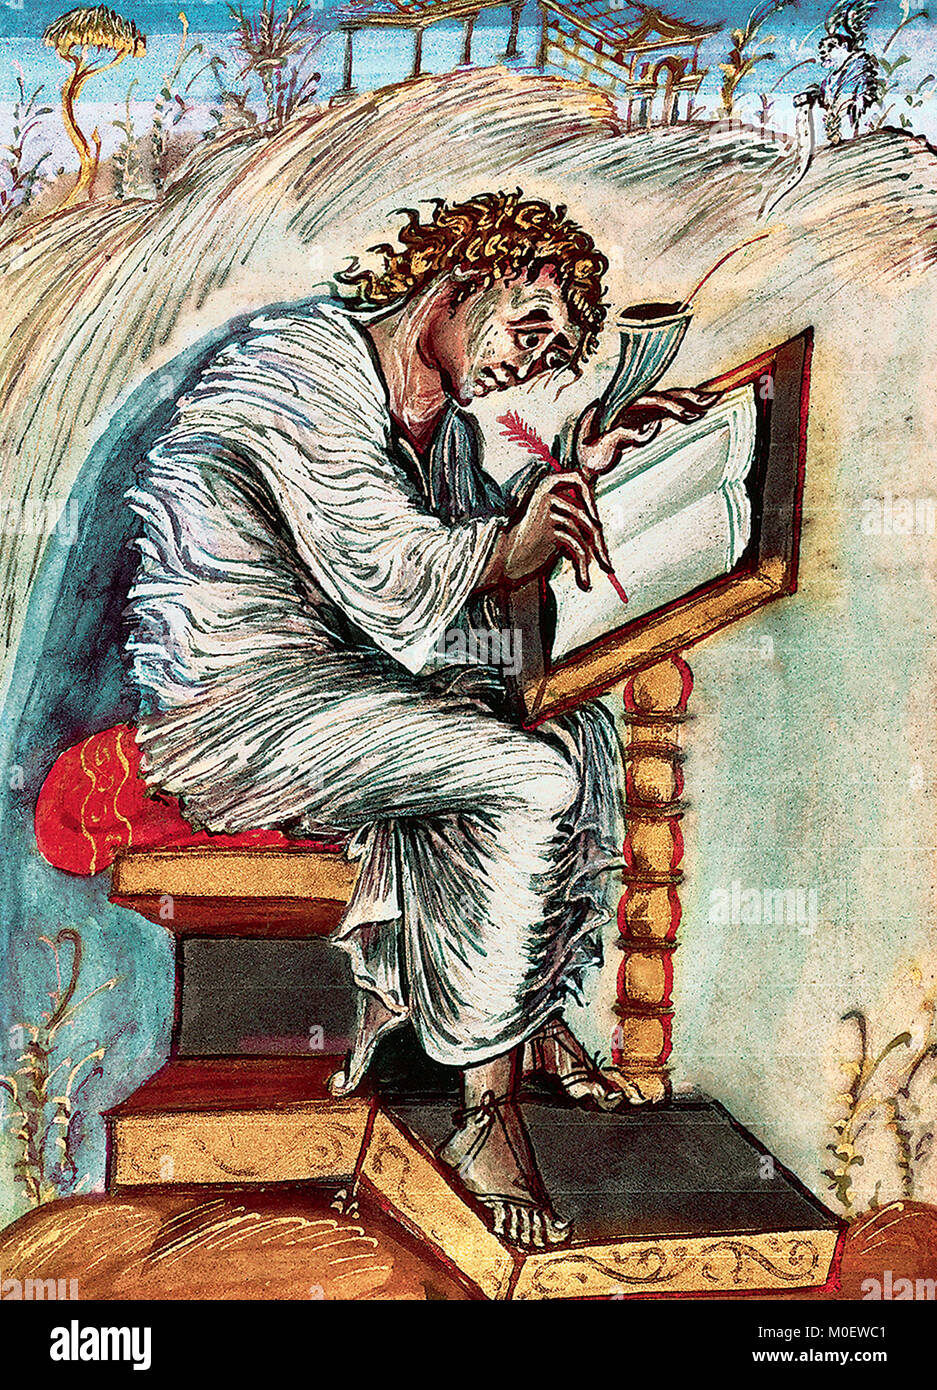 Saint Matthew writing a Gospel - Illustration of Saint Matthew, from the 9th century Ebbo Gospels Stock Photo